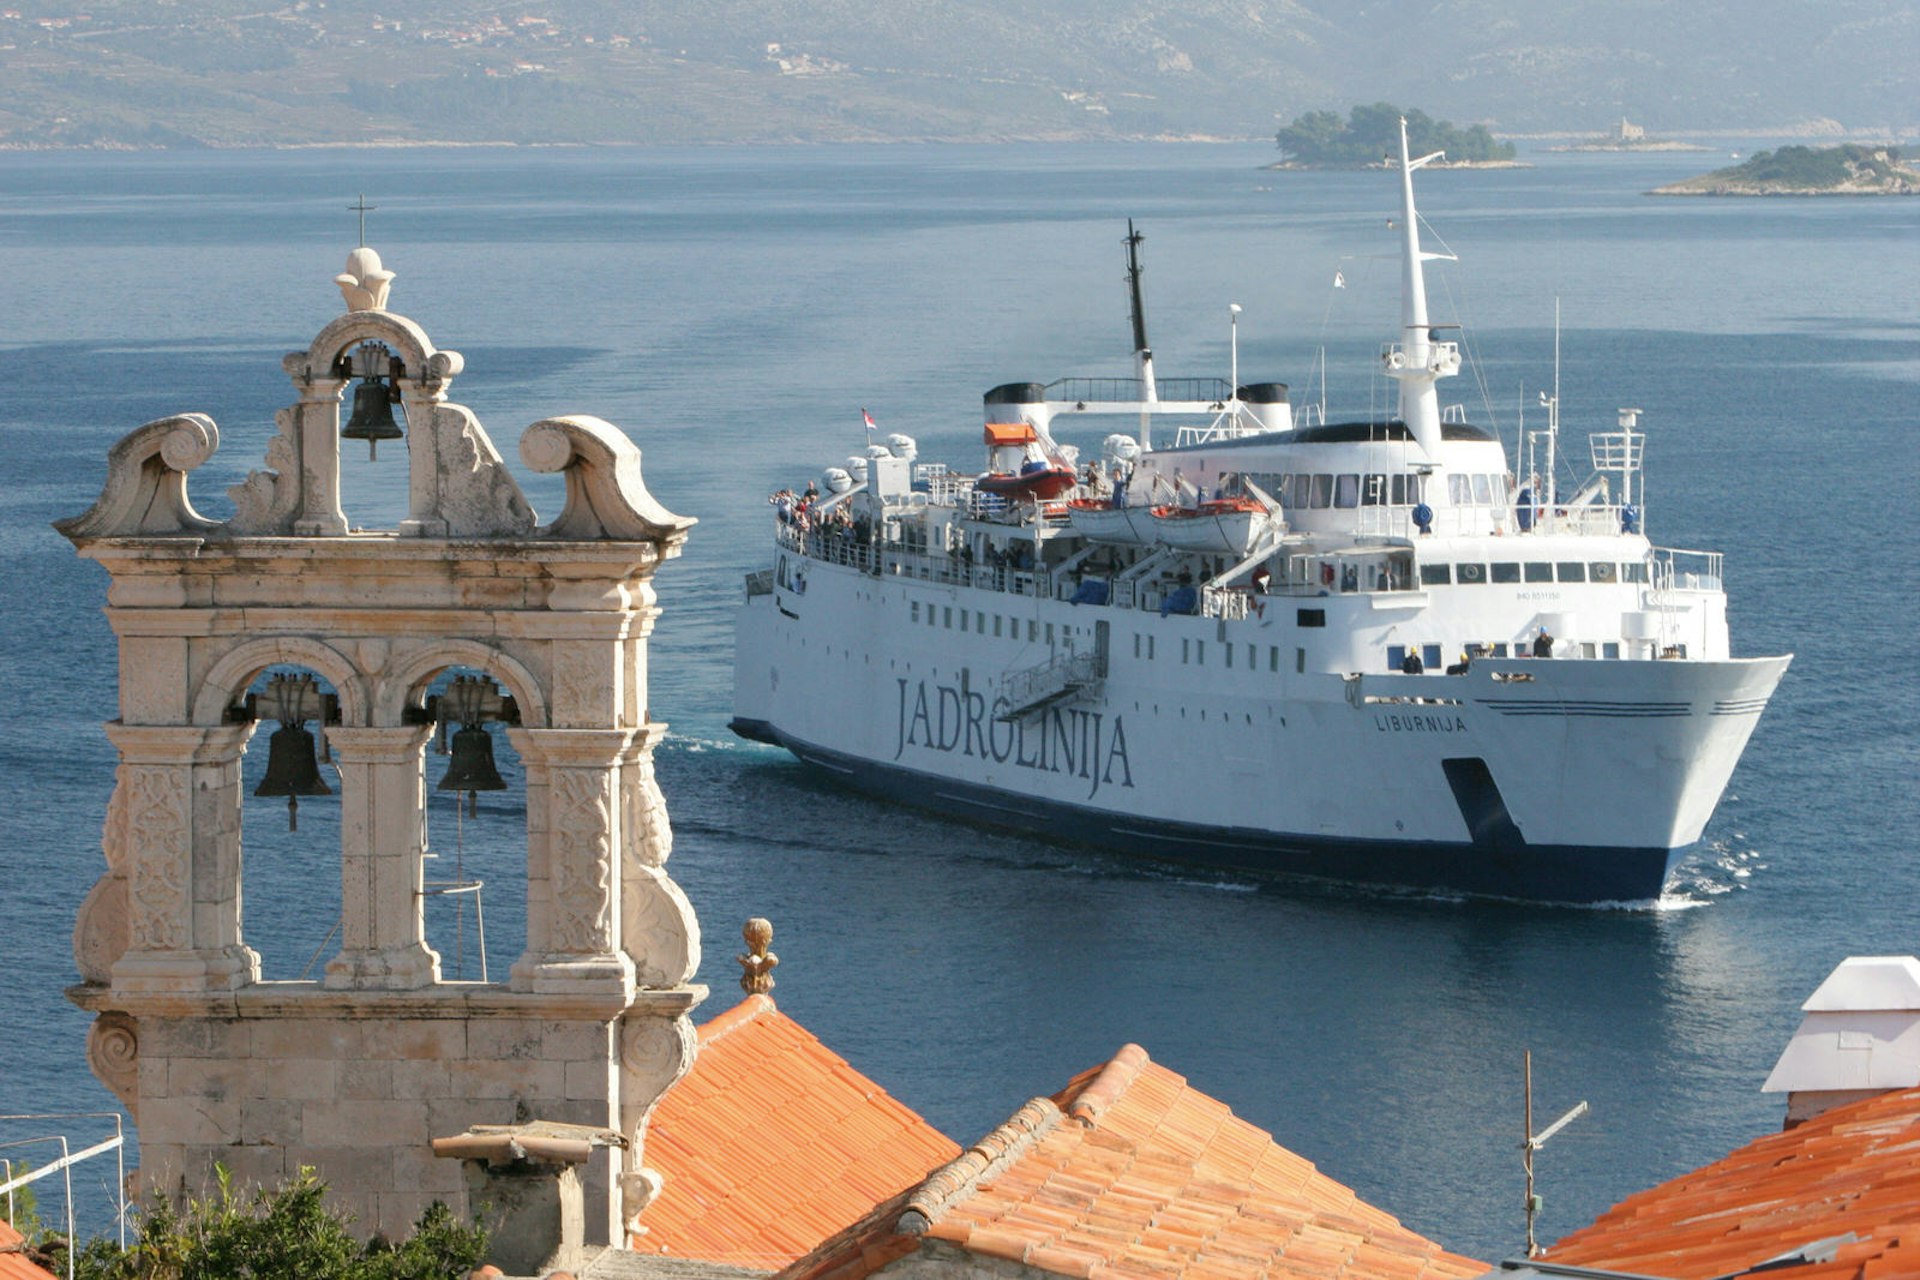 A Jadrolinija ferry arrives in Korčula